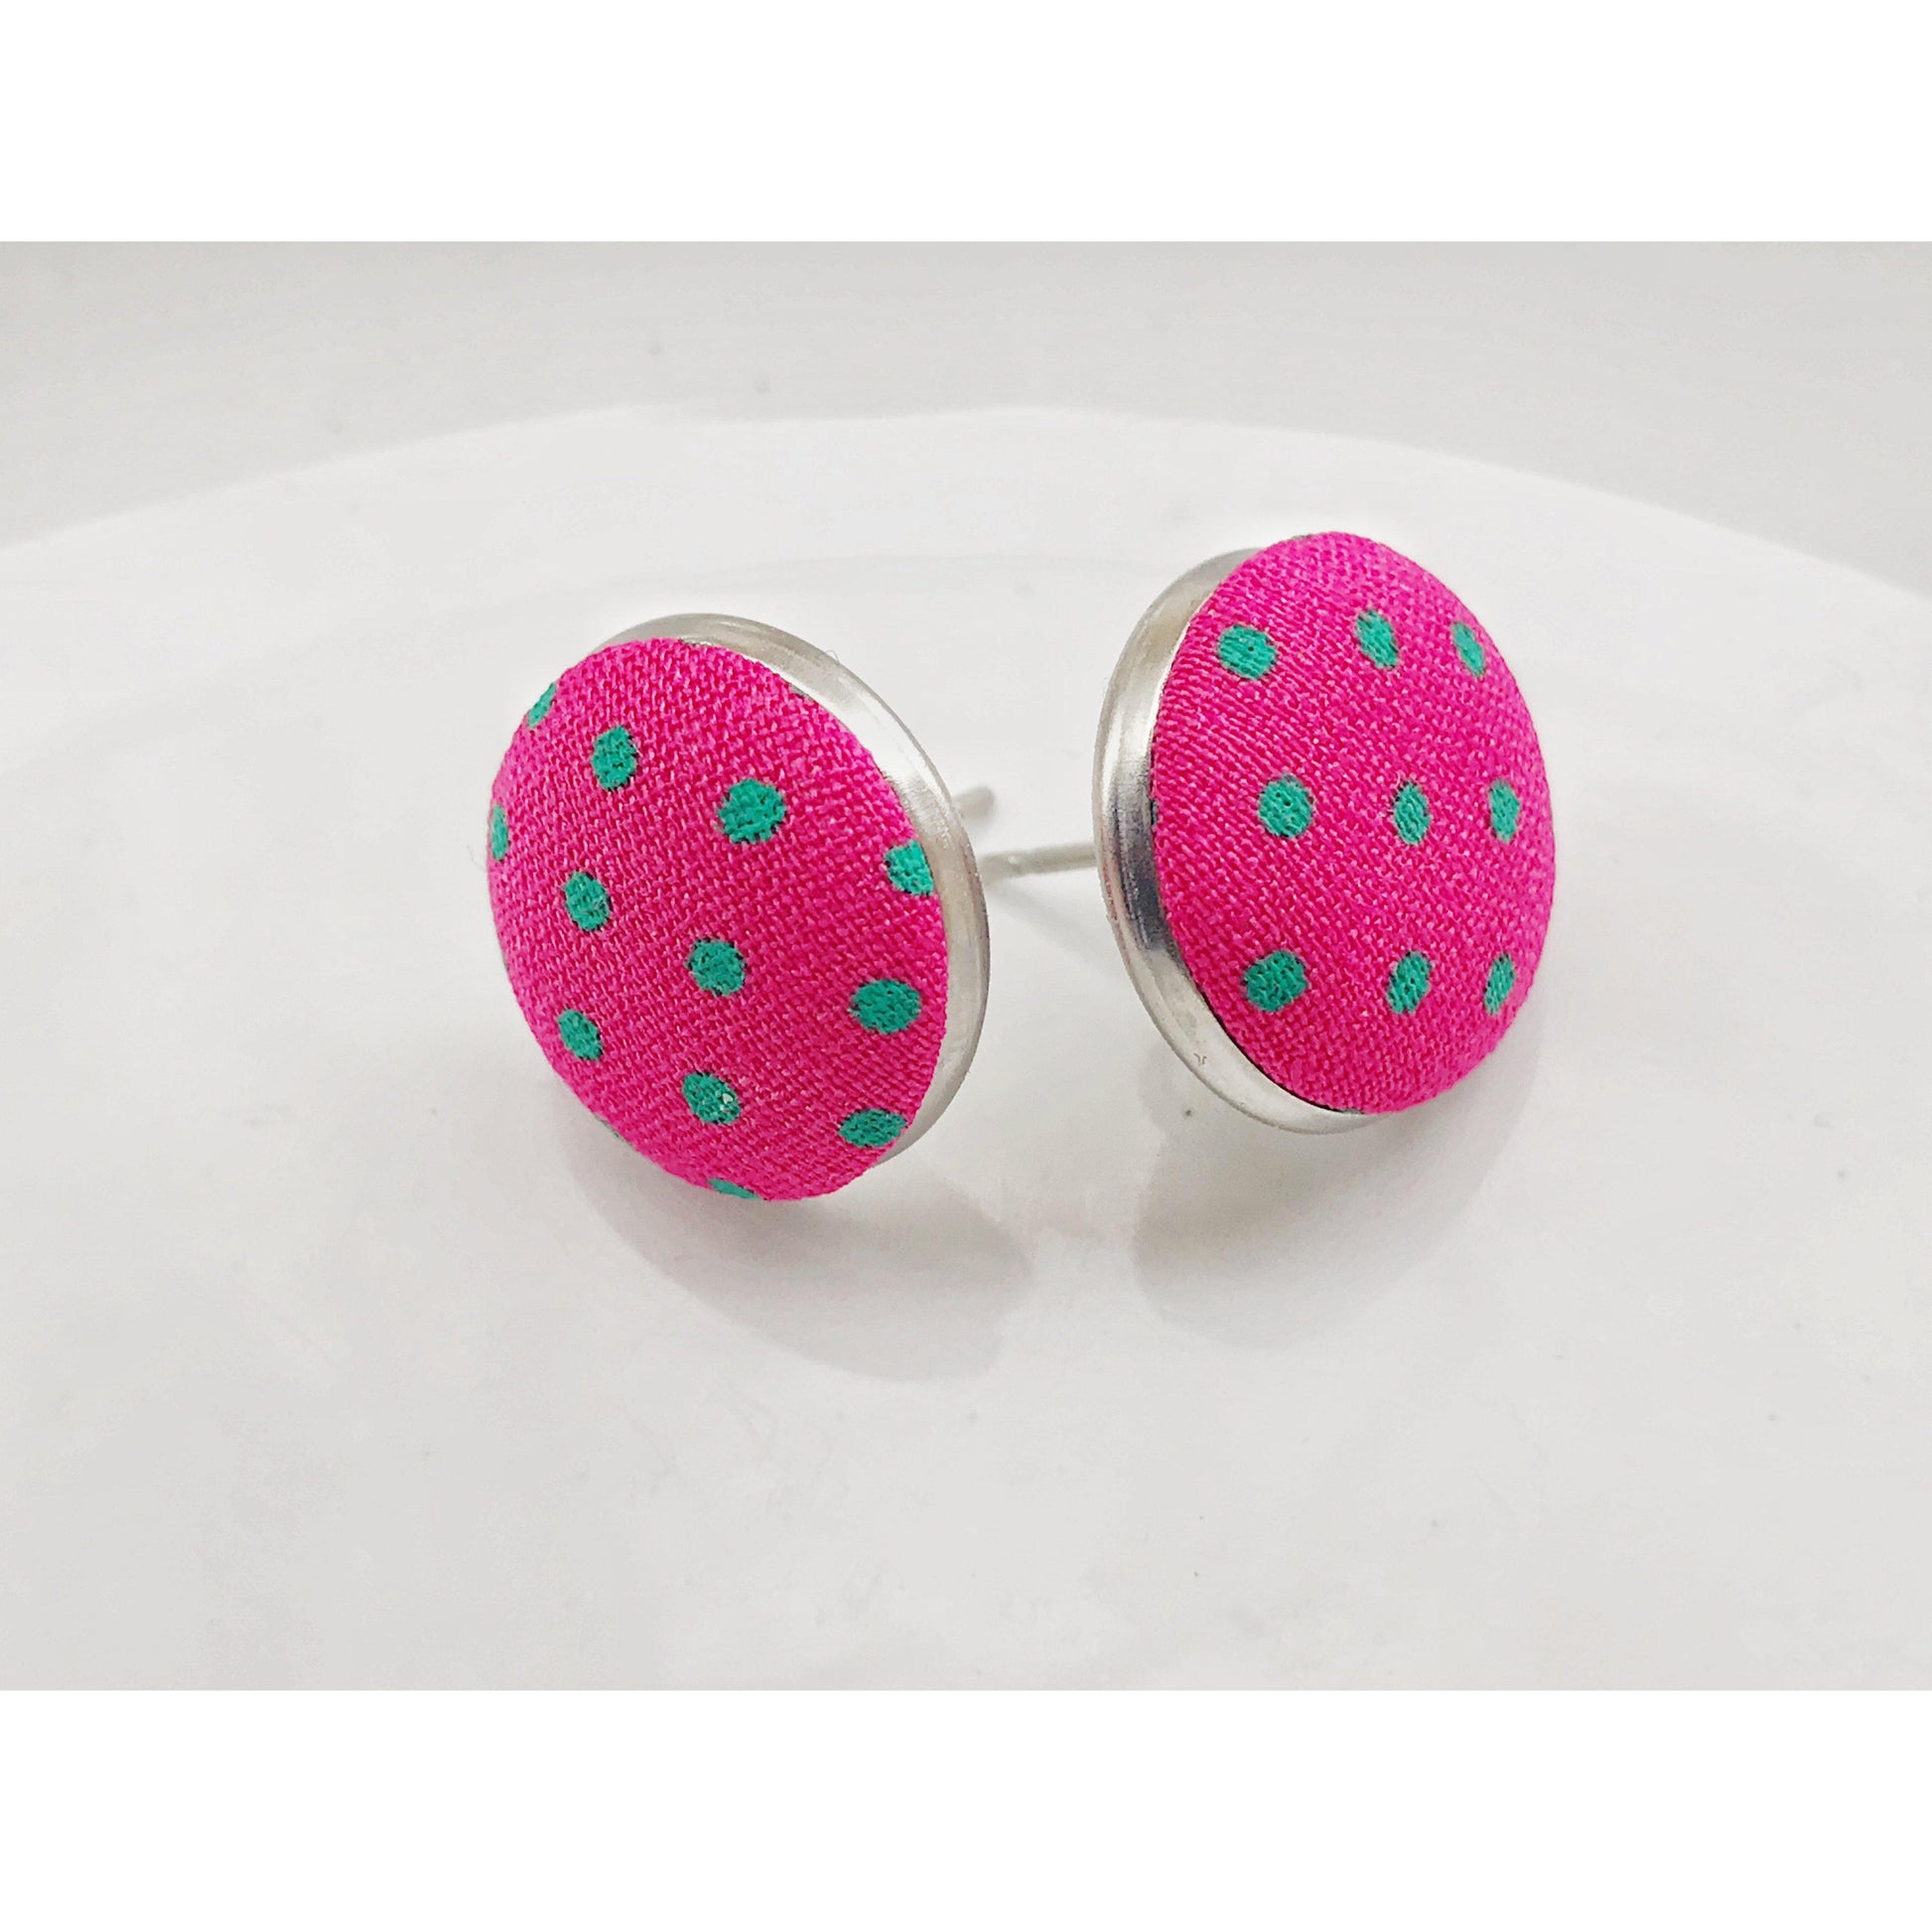 Hot Pink Polka Dot Stud Earrings - Playful & Stylish Accessories